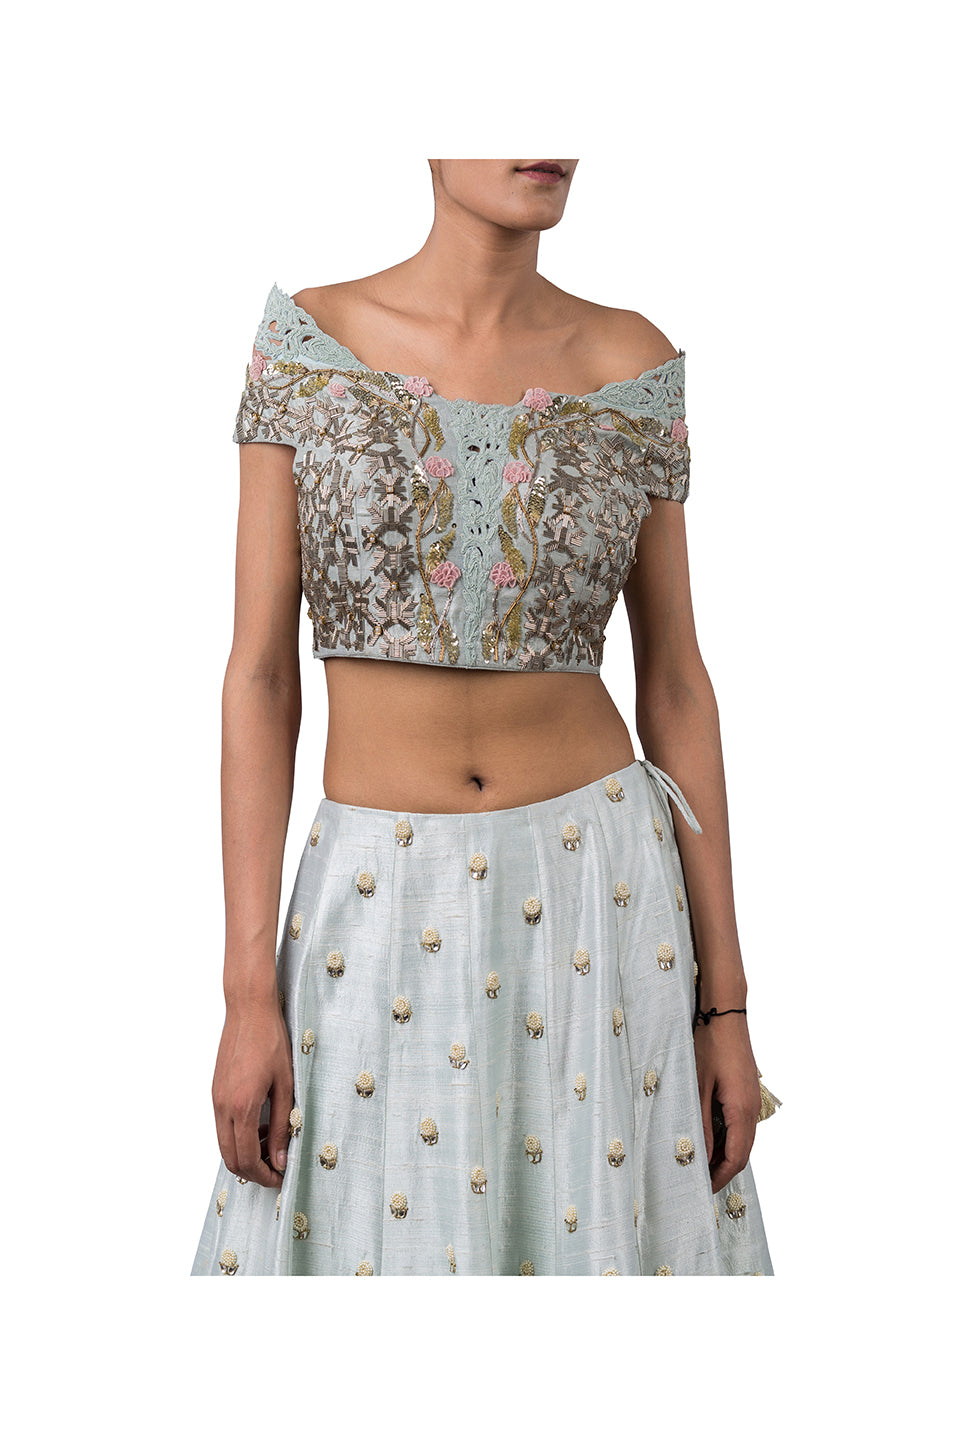 Pretty floral lengha with off the shoulder crop top | Crop top wedding  dress indian, Lengha blouse designs, Designer bridal lehenga choli